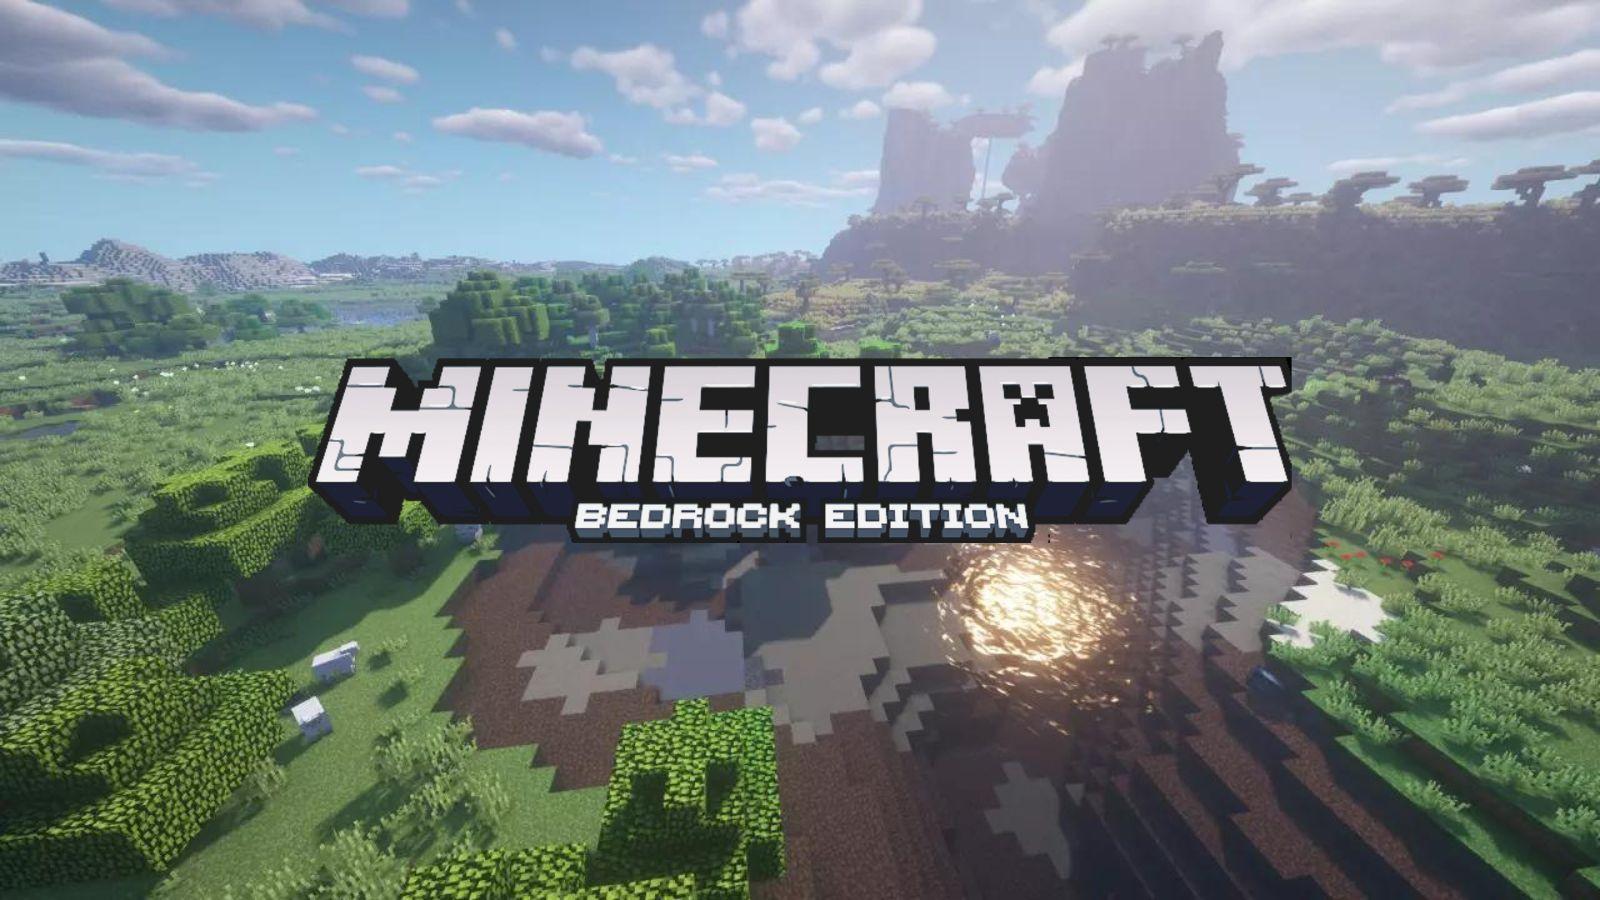 Minecraft Bedrock Updated!